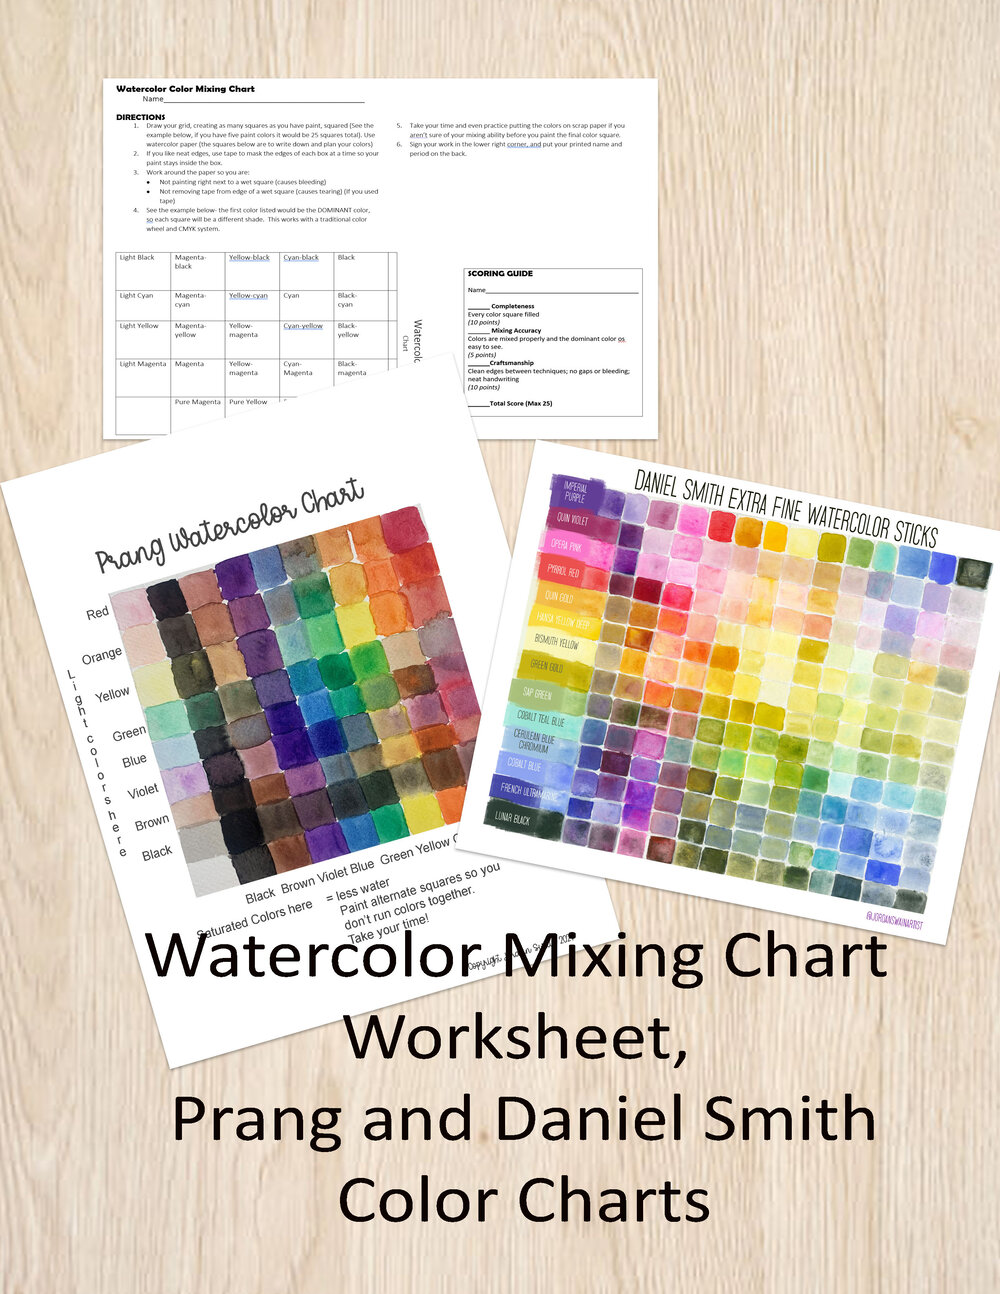 Color mixing chart lesson! Free for art — Jordan